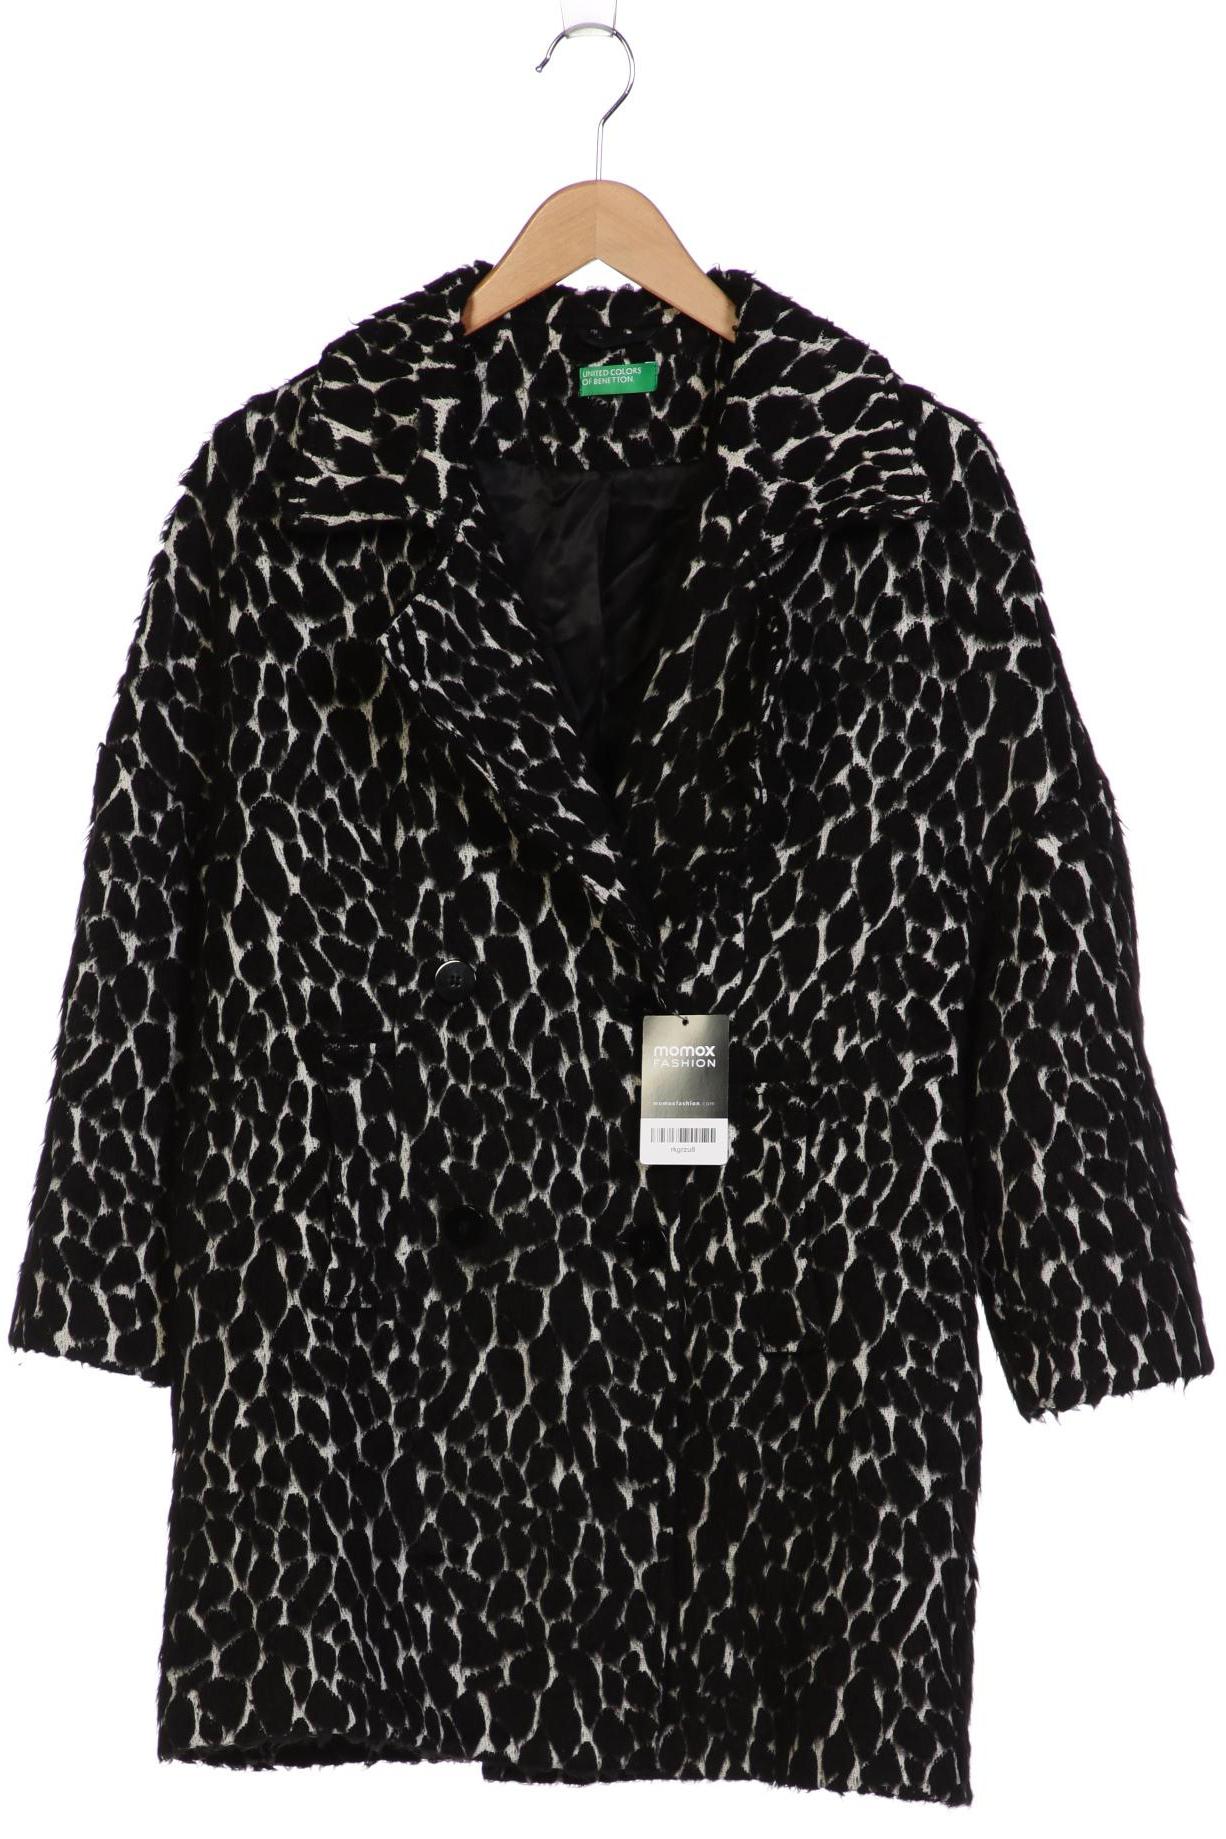 UNITED COLORS OF BENETTON Damen Mantel, schwarz von United Colors of Benetton